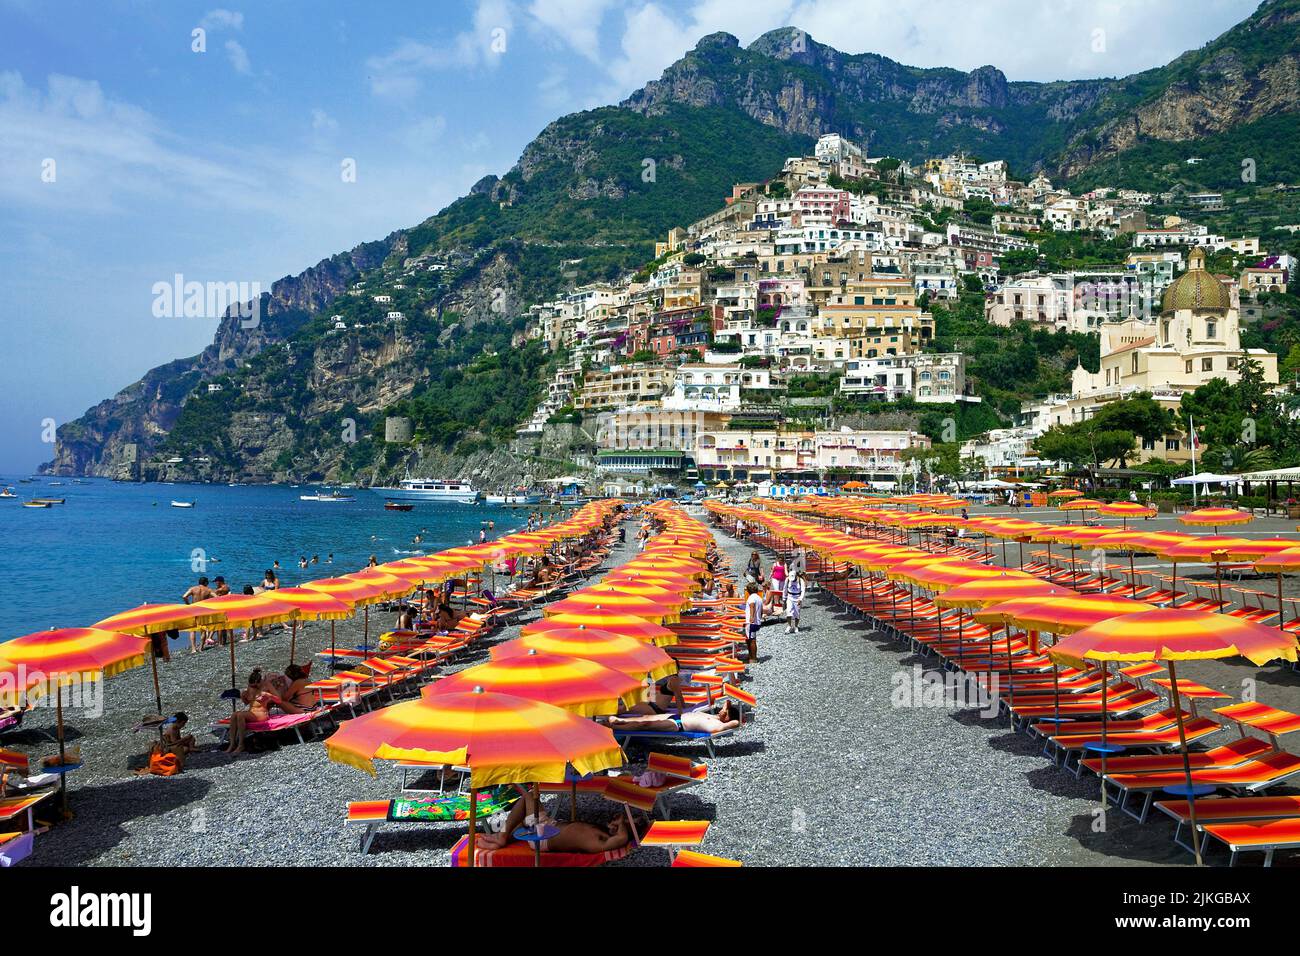 People at the beach of the village Positano, Amalfi coast, Unesco World Heritage site, Campania, Italy, Europe Stock Photo